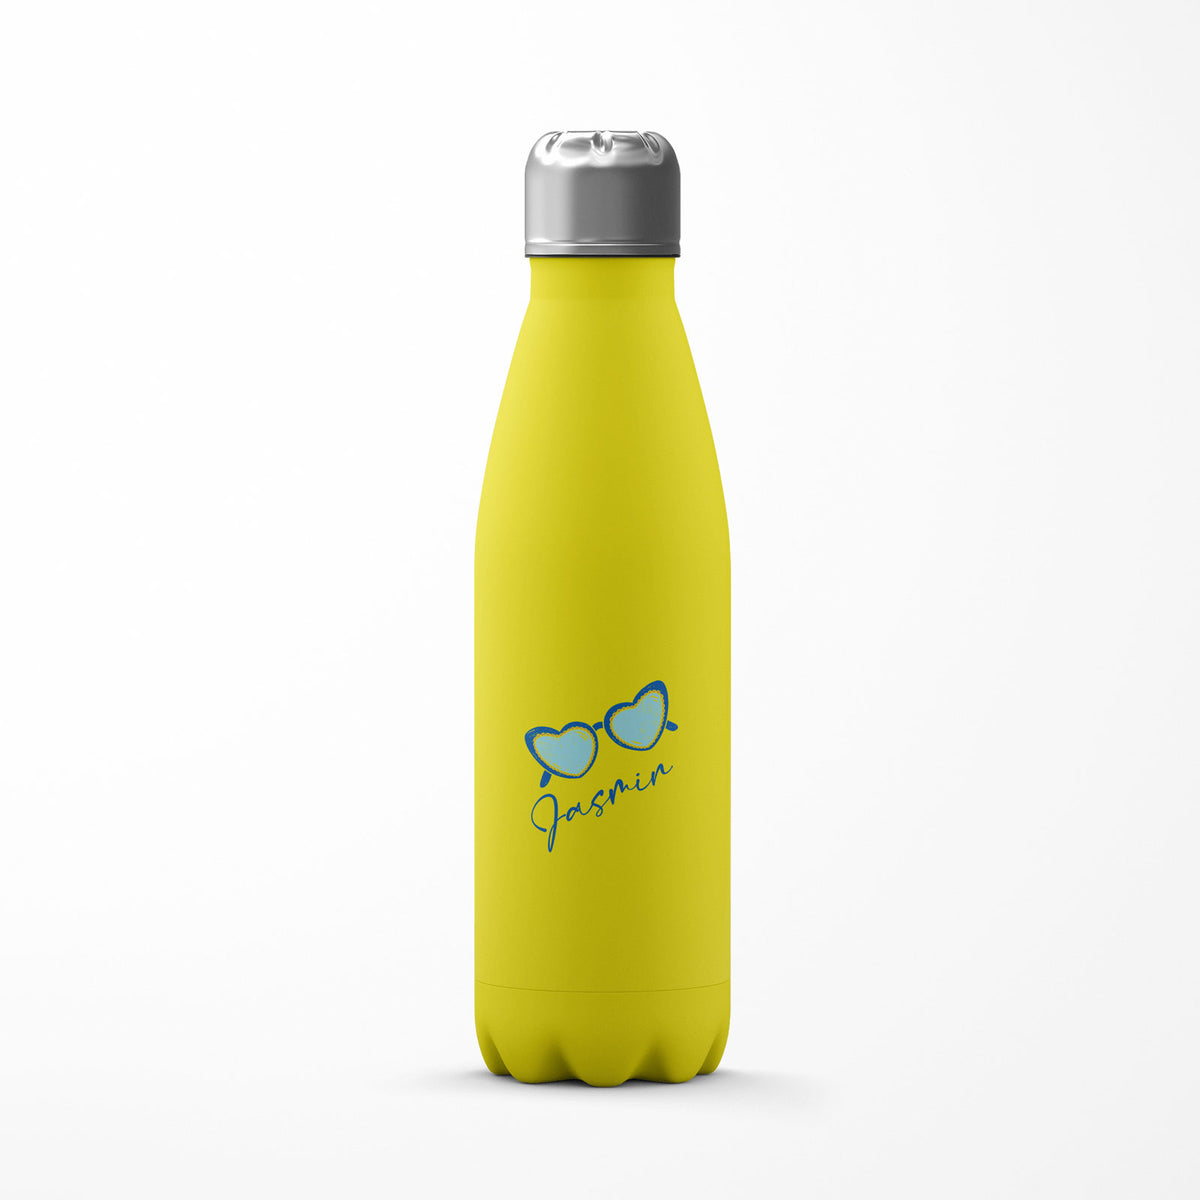 Personalised Water Bottle Heart Shape Glasses